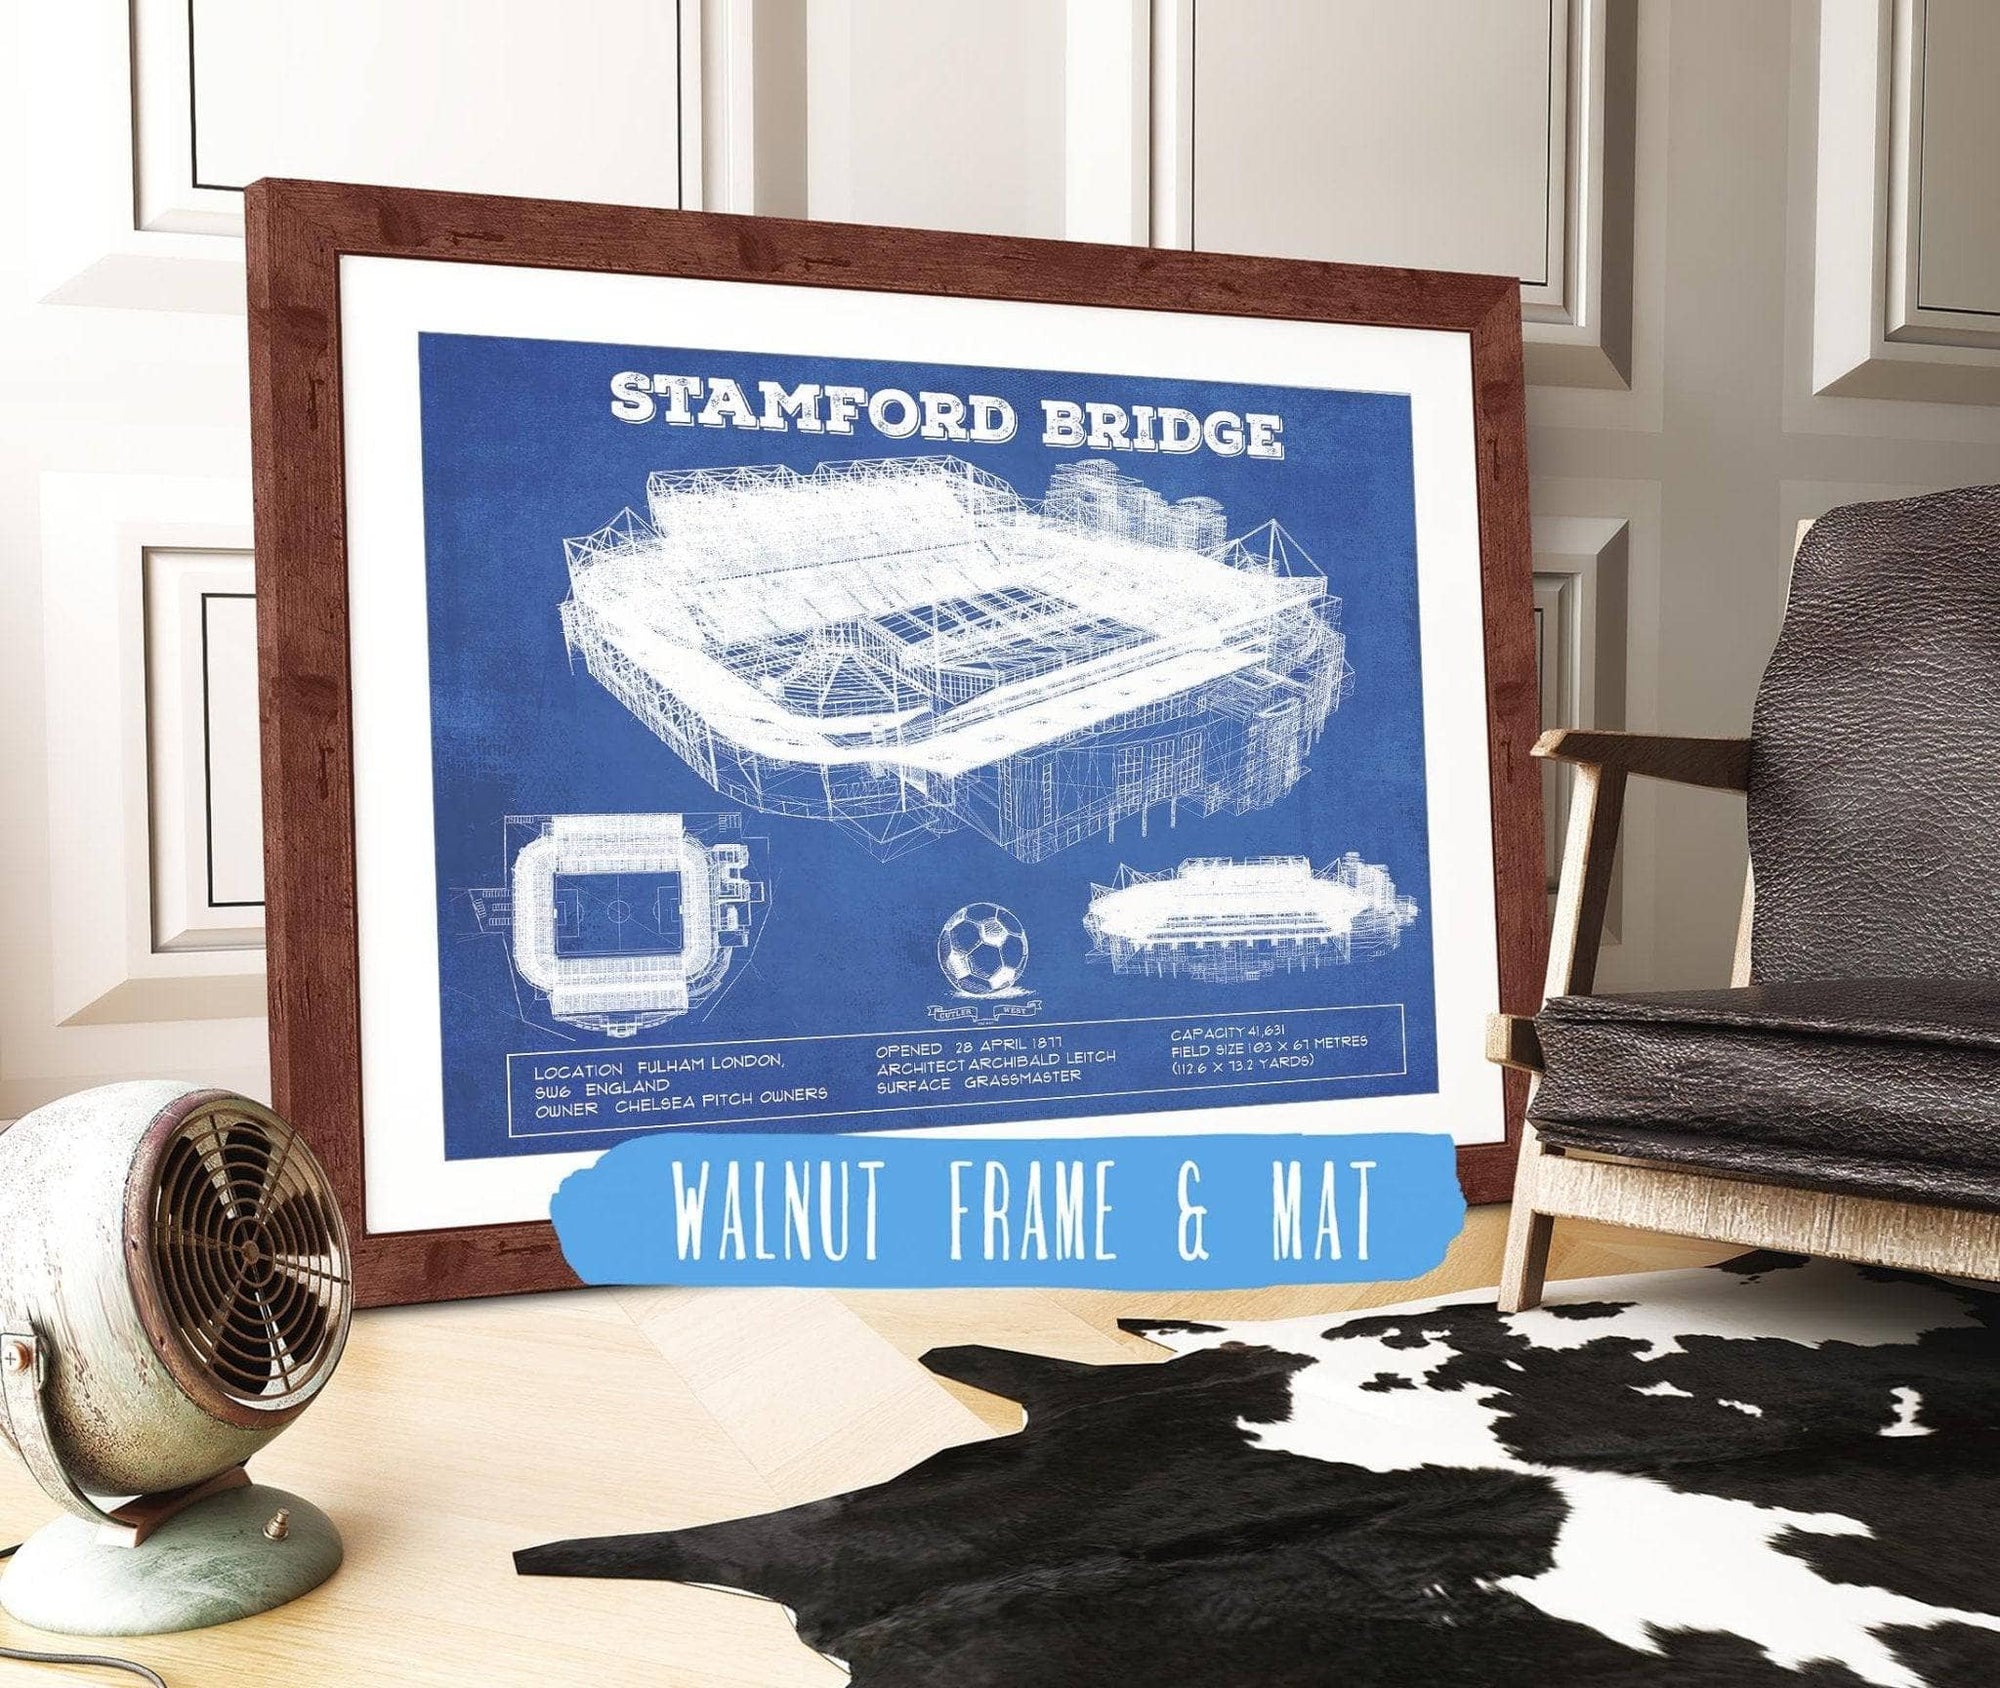 Cutler West Soccer Collection 14" x 11" / Walnut Frame & Mat Stamford Bridge - Chelsea FC European Football Soccer Stadium Print 700225520-TOP